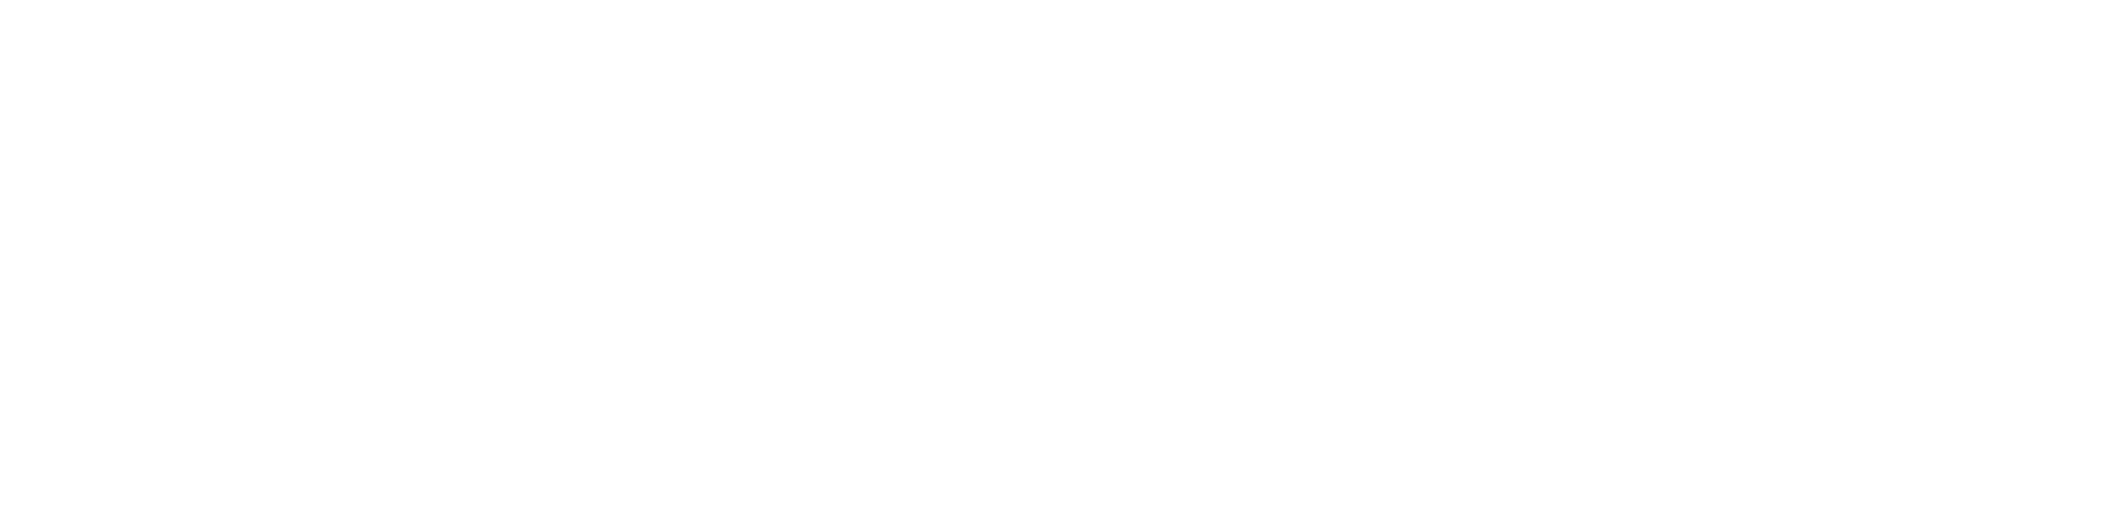 Hansen-Amrum